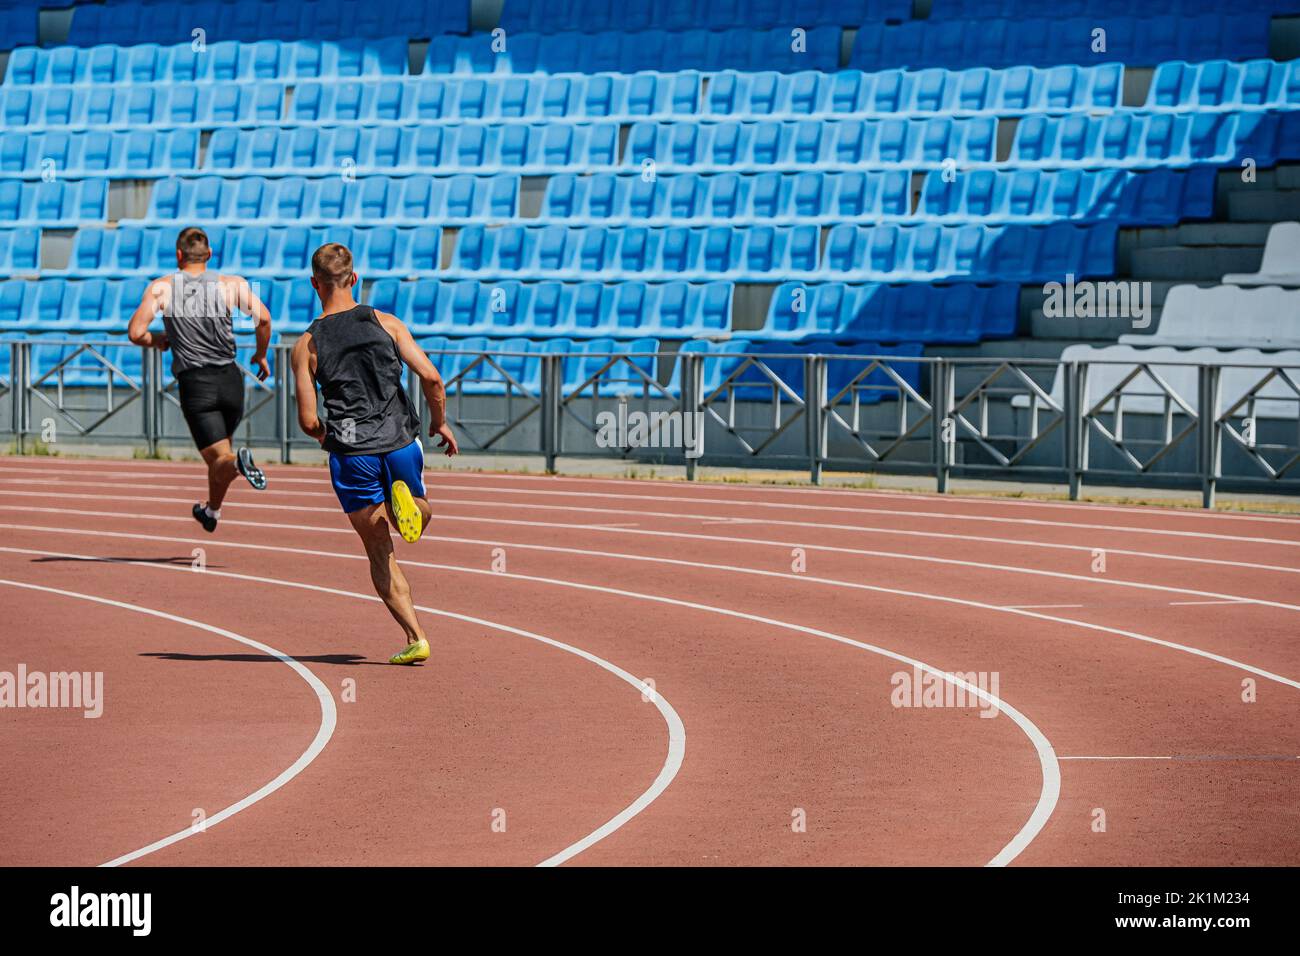 athletes runners running 400 meters race Stock Photo